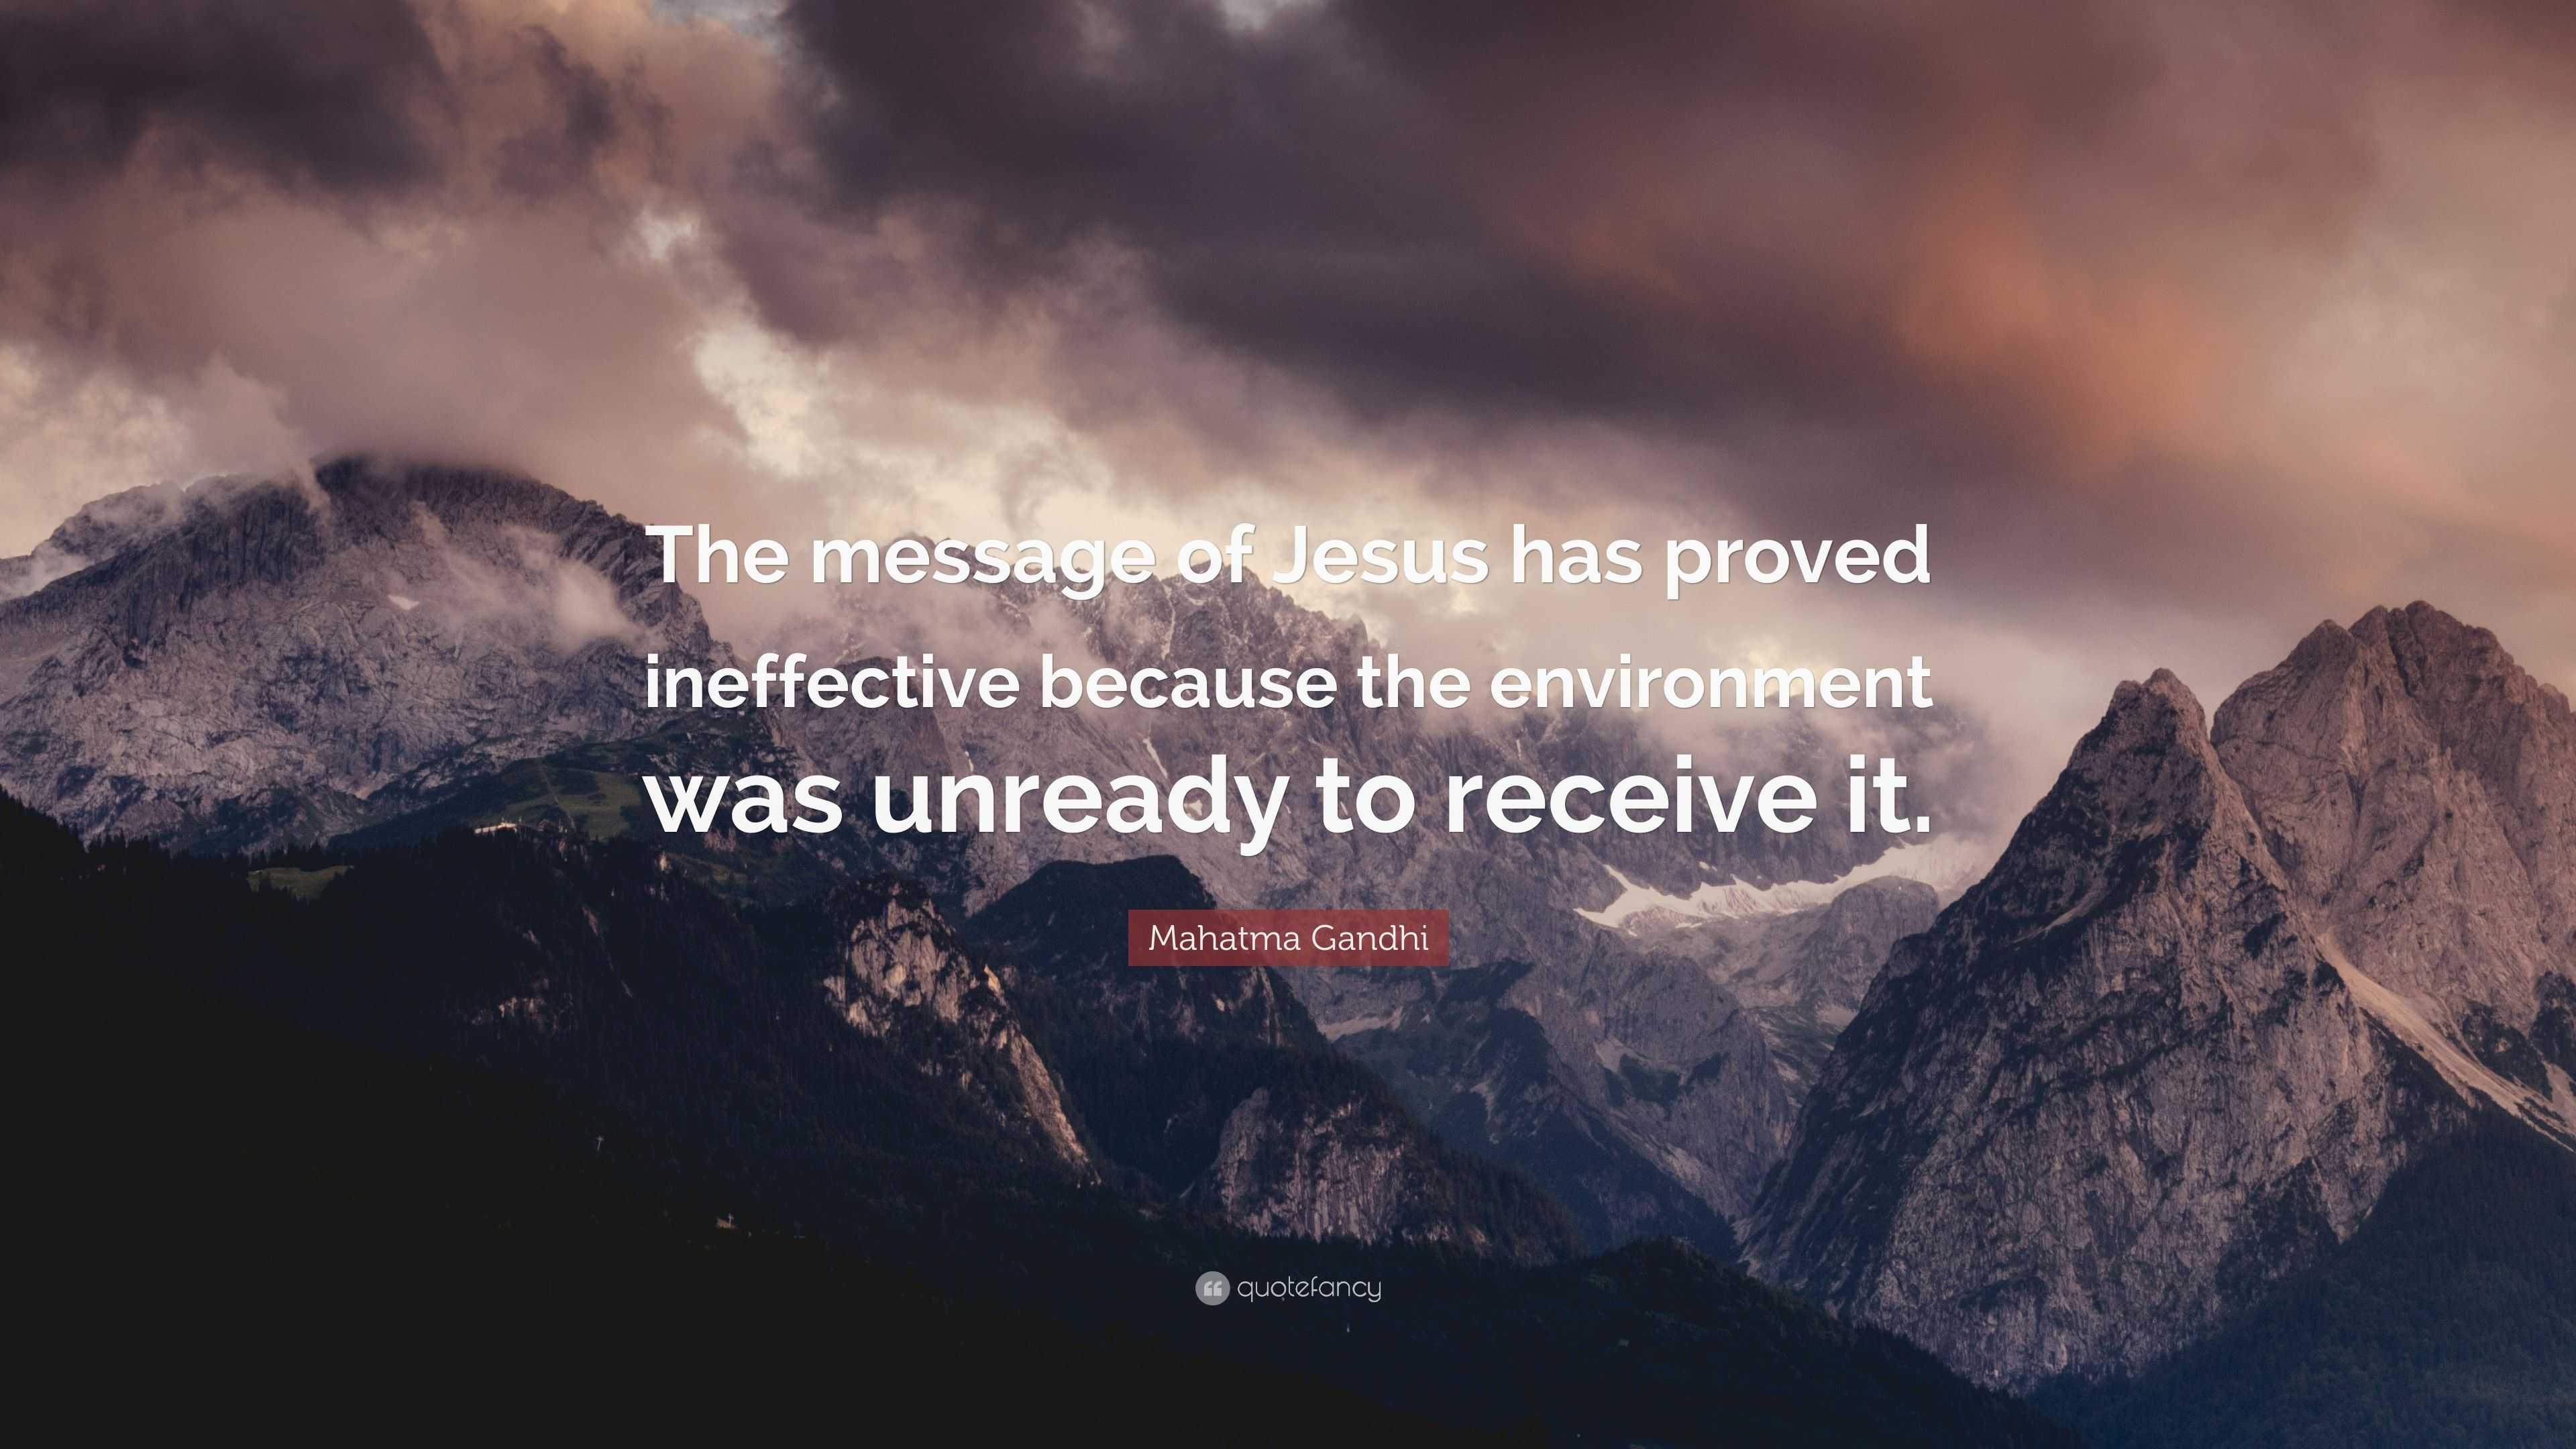 Mahatma Gandhi Quote: “The message of Jesus has proved ineffective